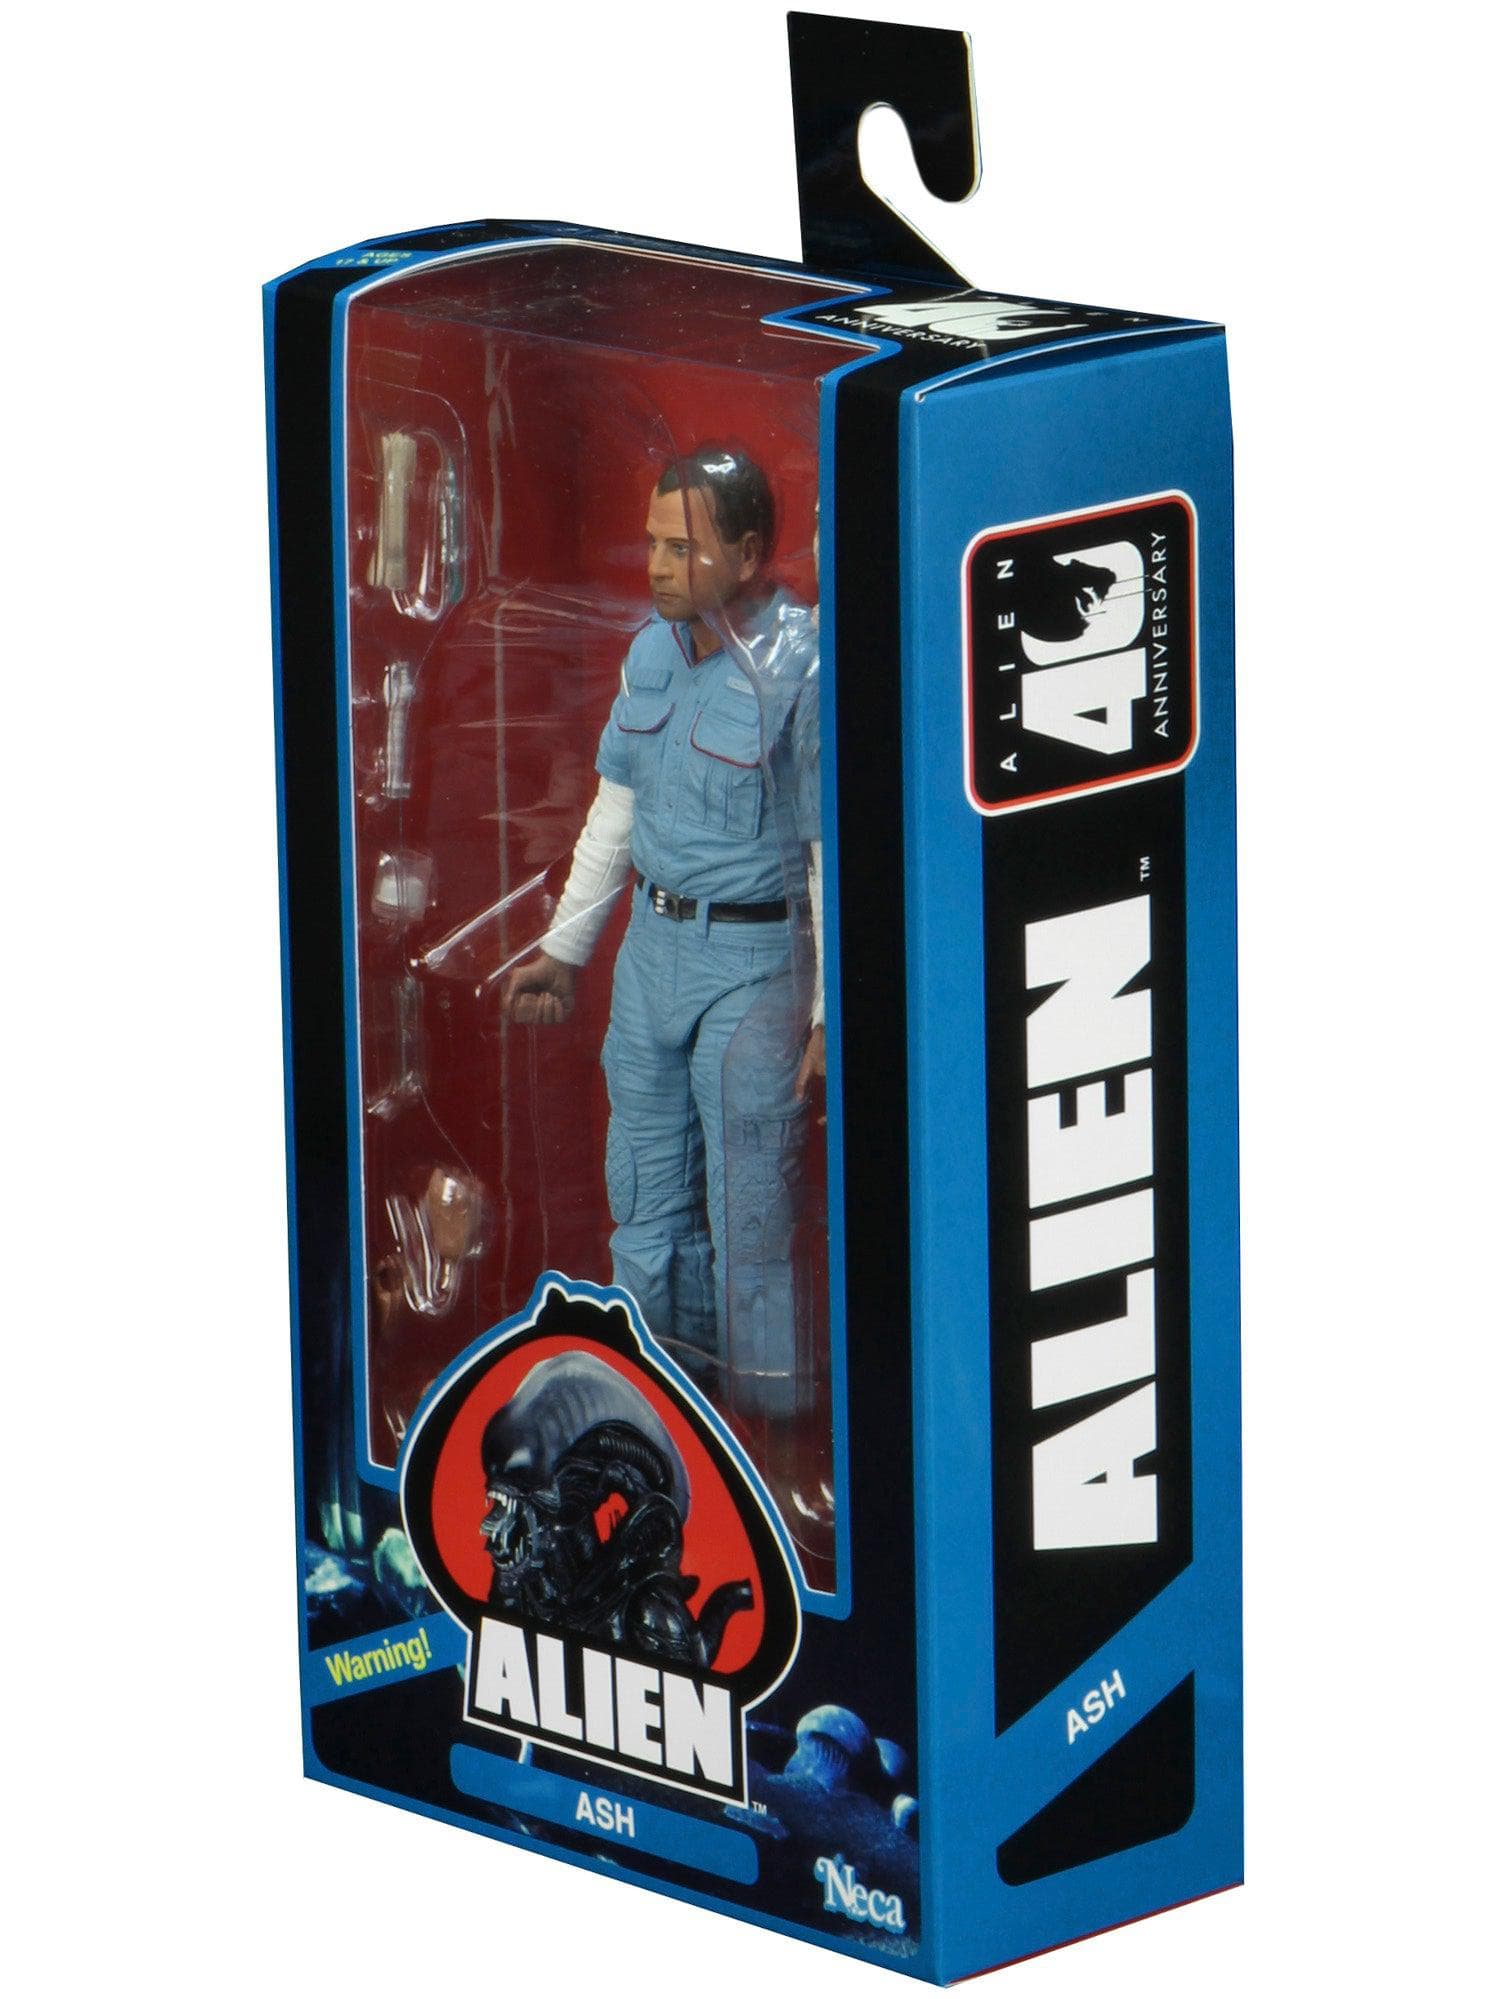 NECA - Alien - 7" Scale Action Figure - 40th Anniversary Asst 3 Ash - costumes.com